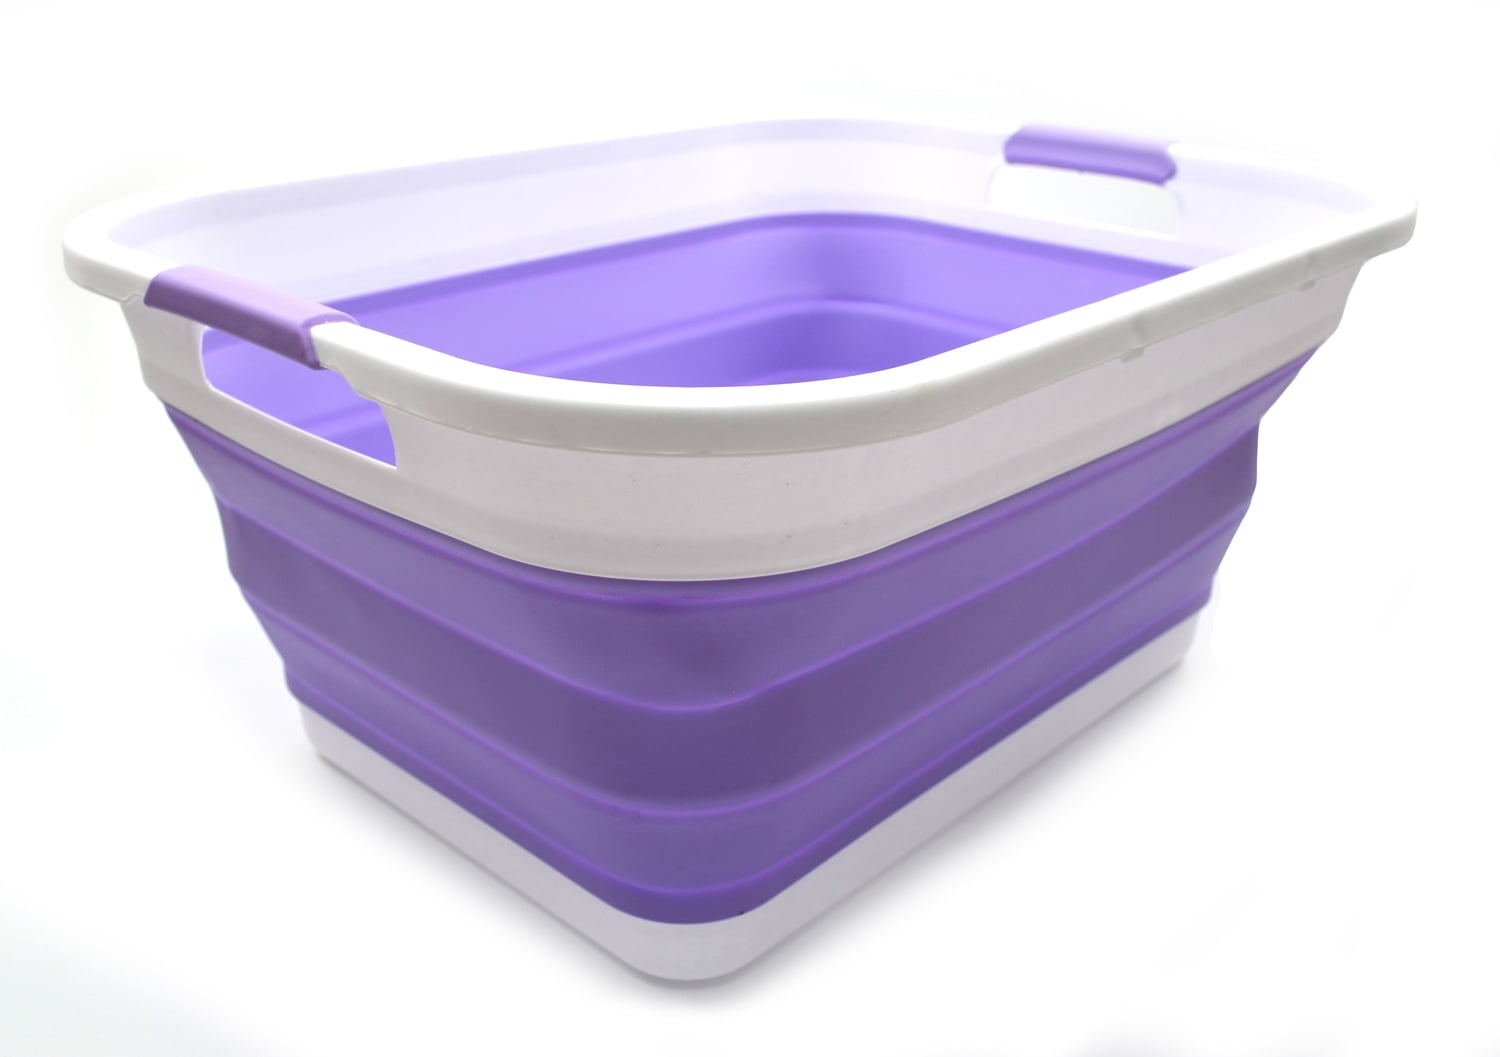 Laundry Clothes Sorter Basket Sammart Collapsible Plastic Foldable Pop Up Storag 